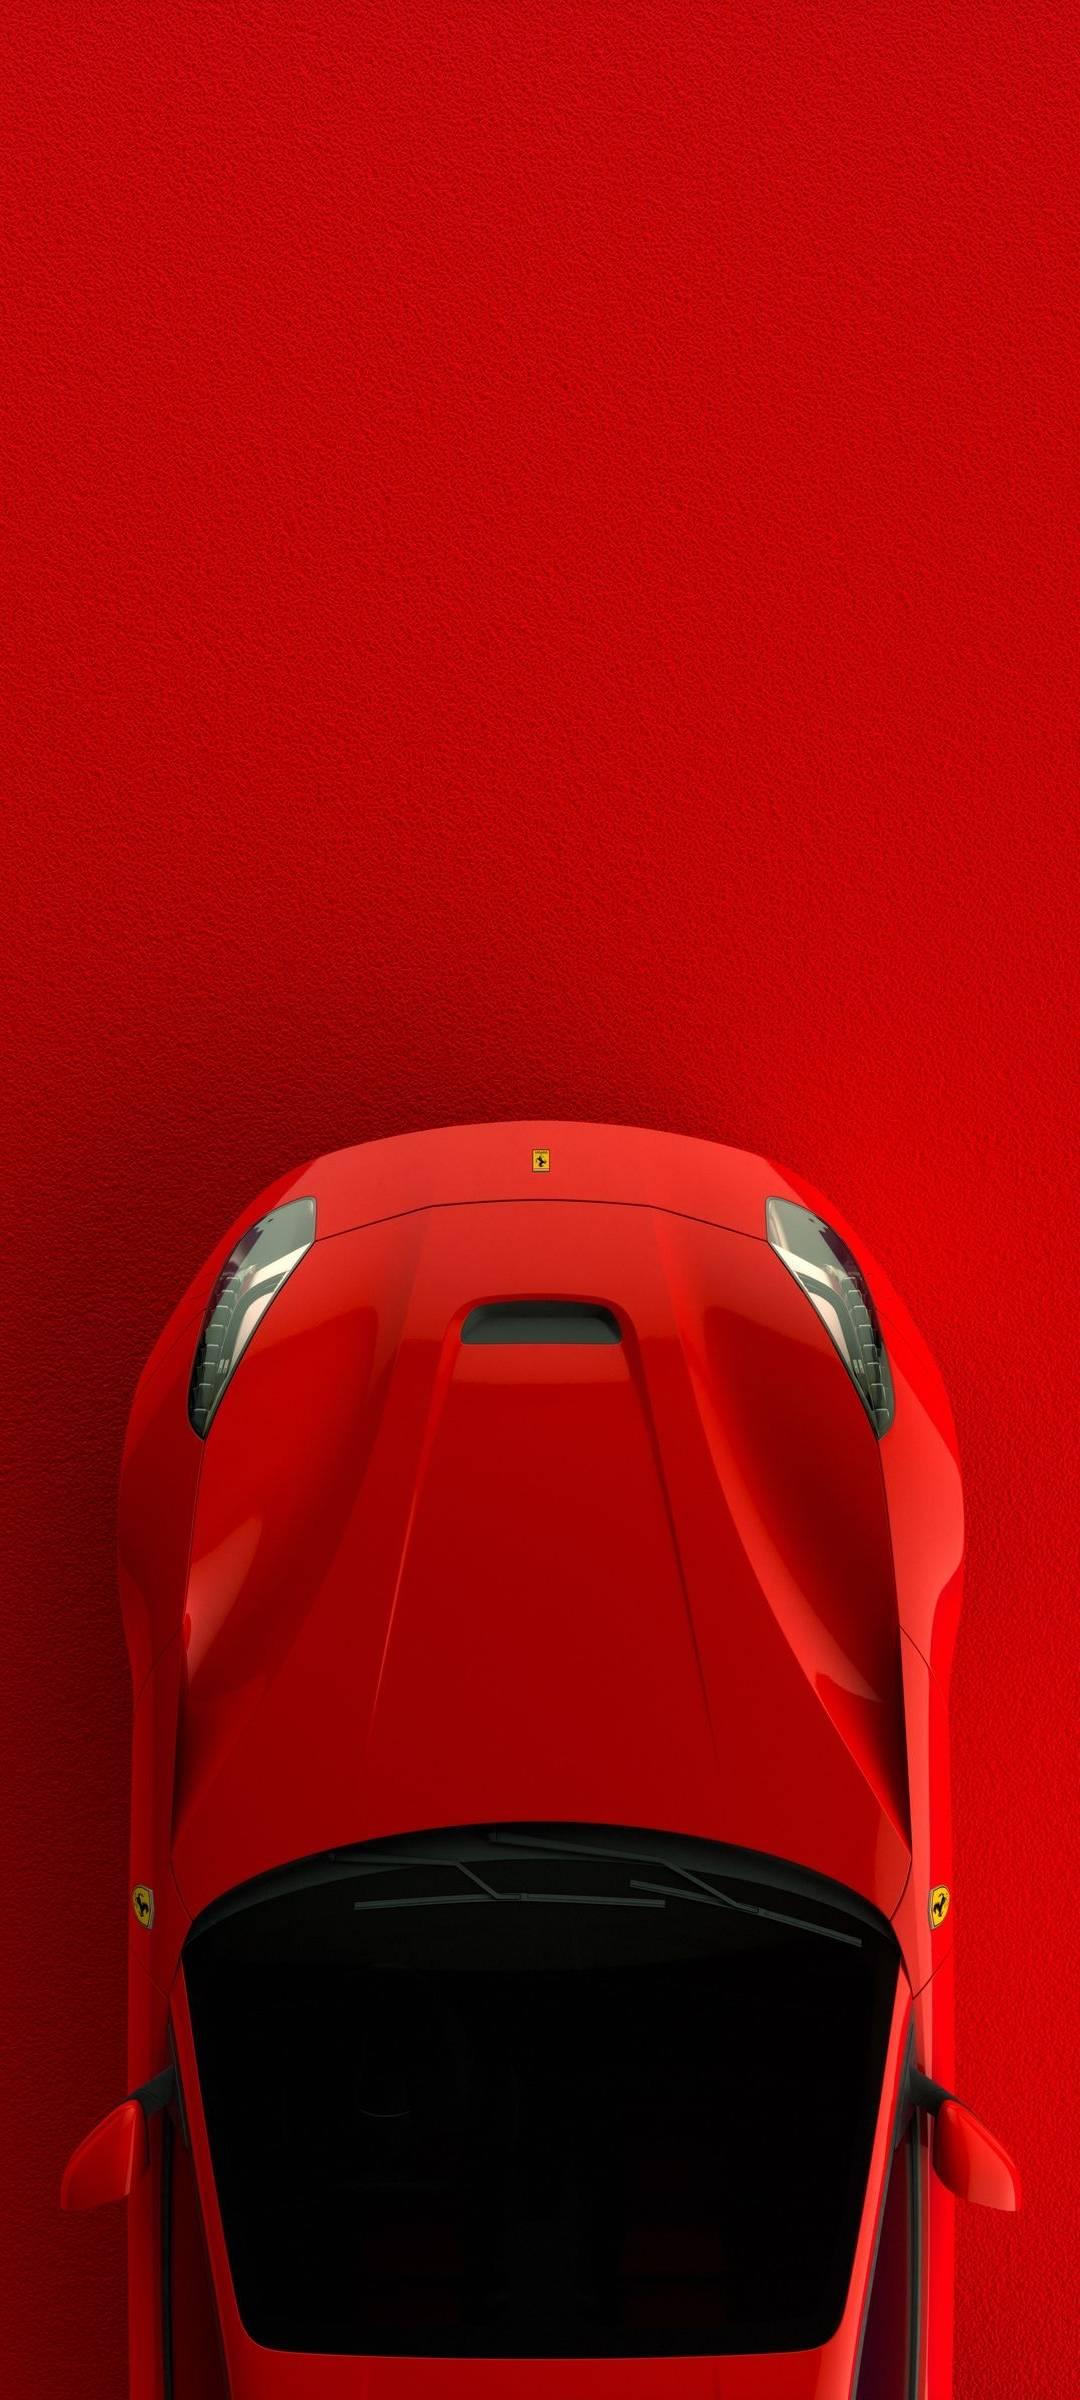 1080x2400 Red Car Wallpaper